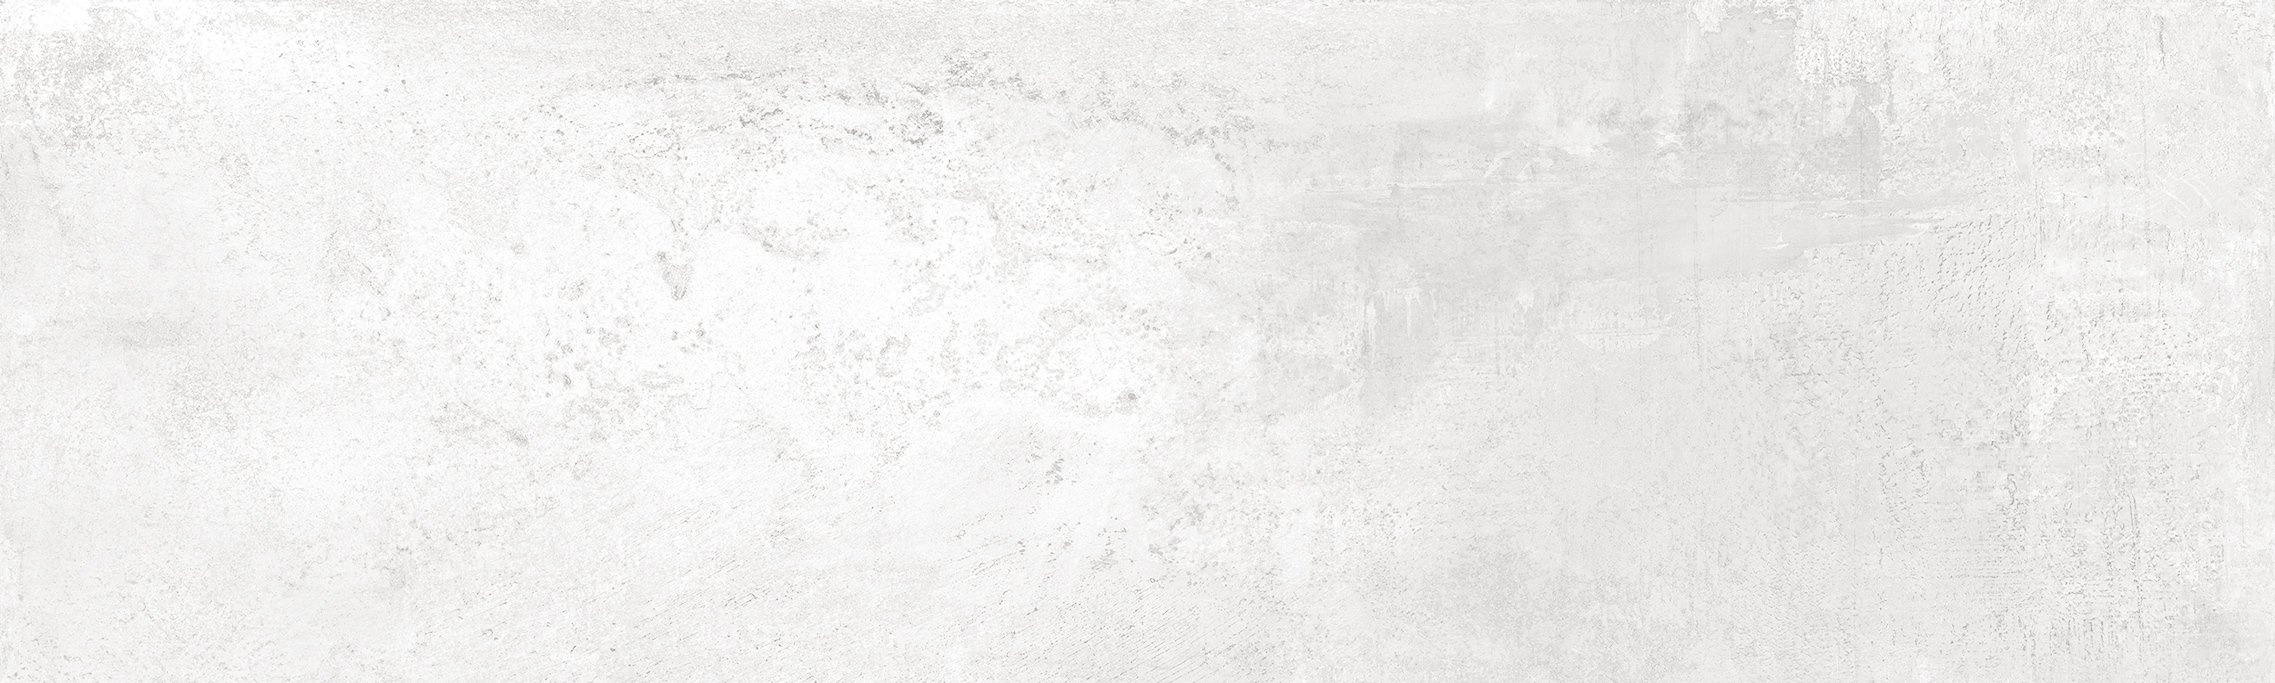 Wandfliese Metalloptik weiß 30x100cm "Metallic Wall White" rektifiziert 